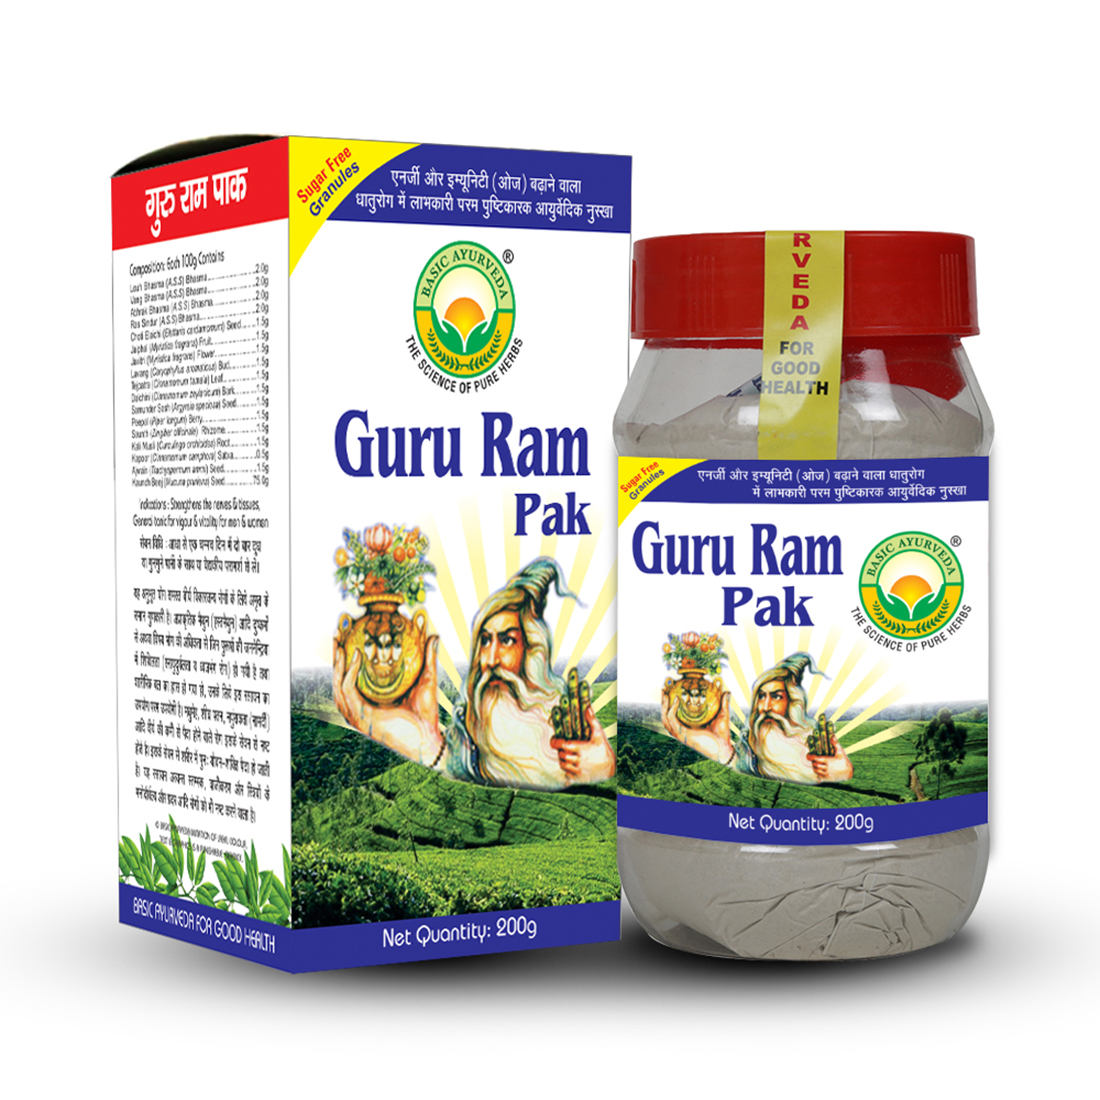 Guru Ram Pak